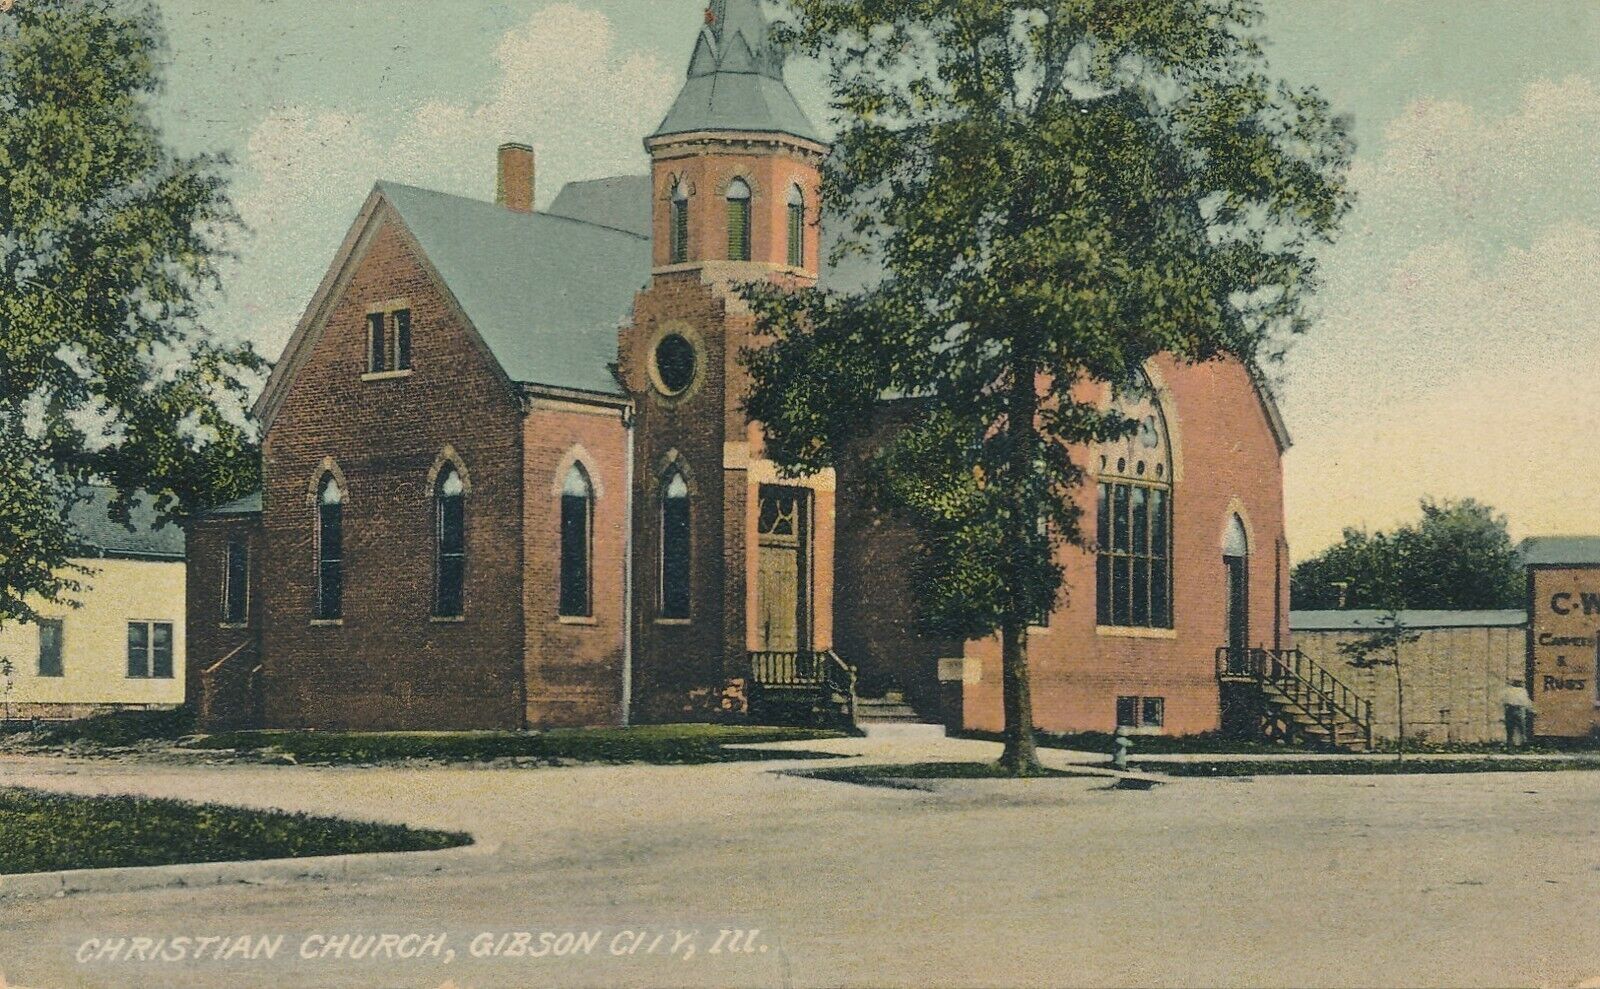 GIBSON CITY IL – Christian Church - 1917